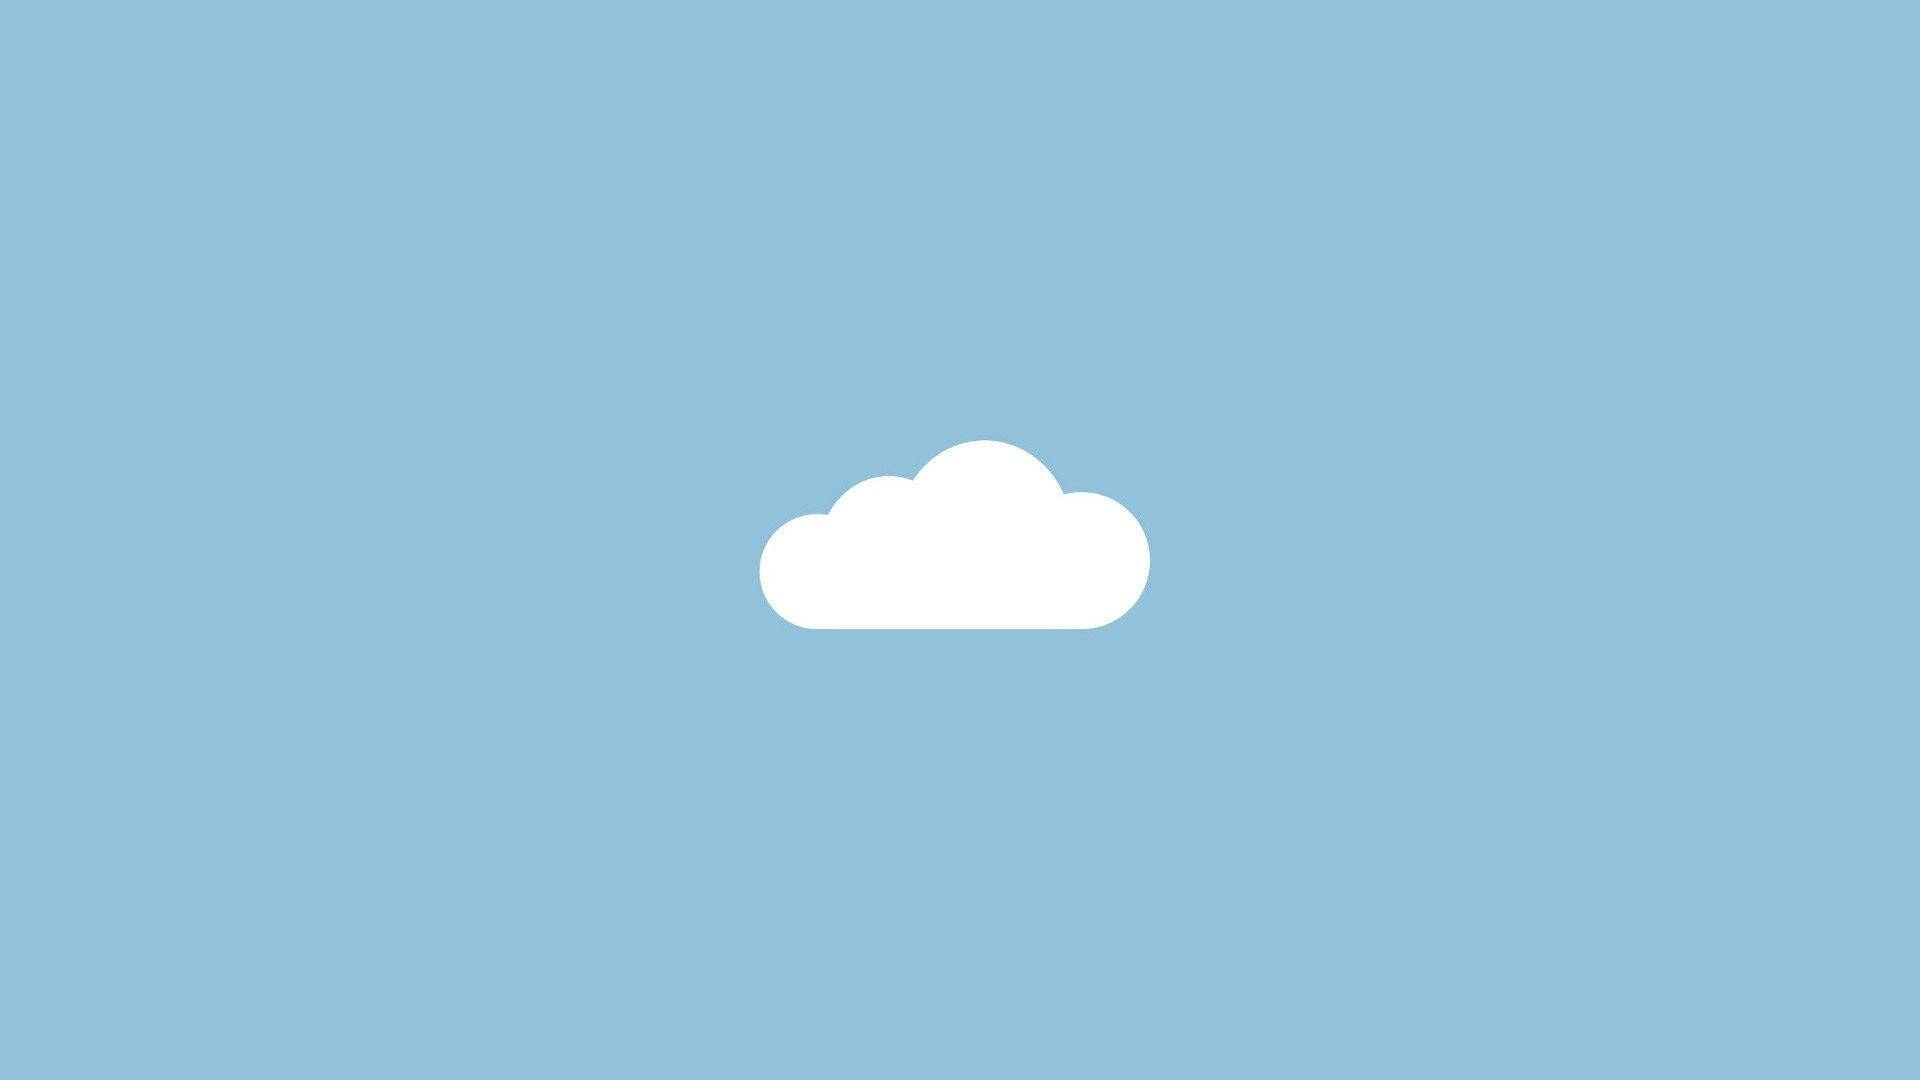 Minimalist Aesthetic Desktop White Cloud Background